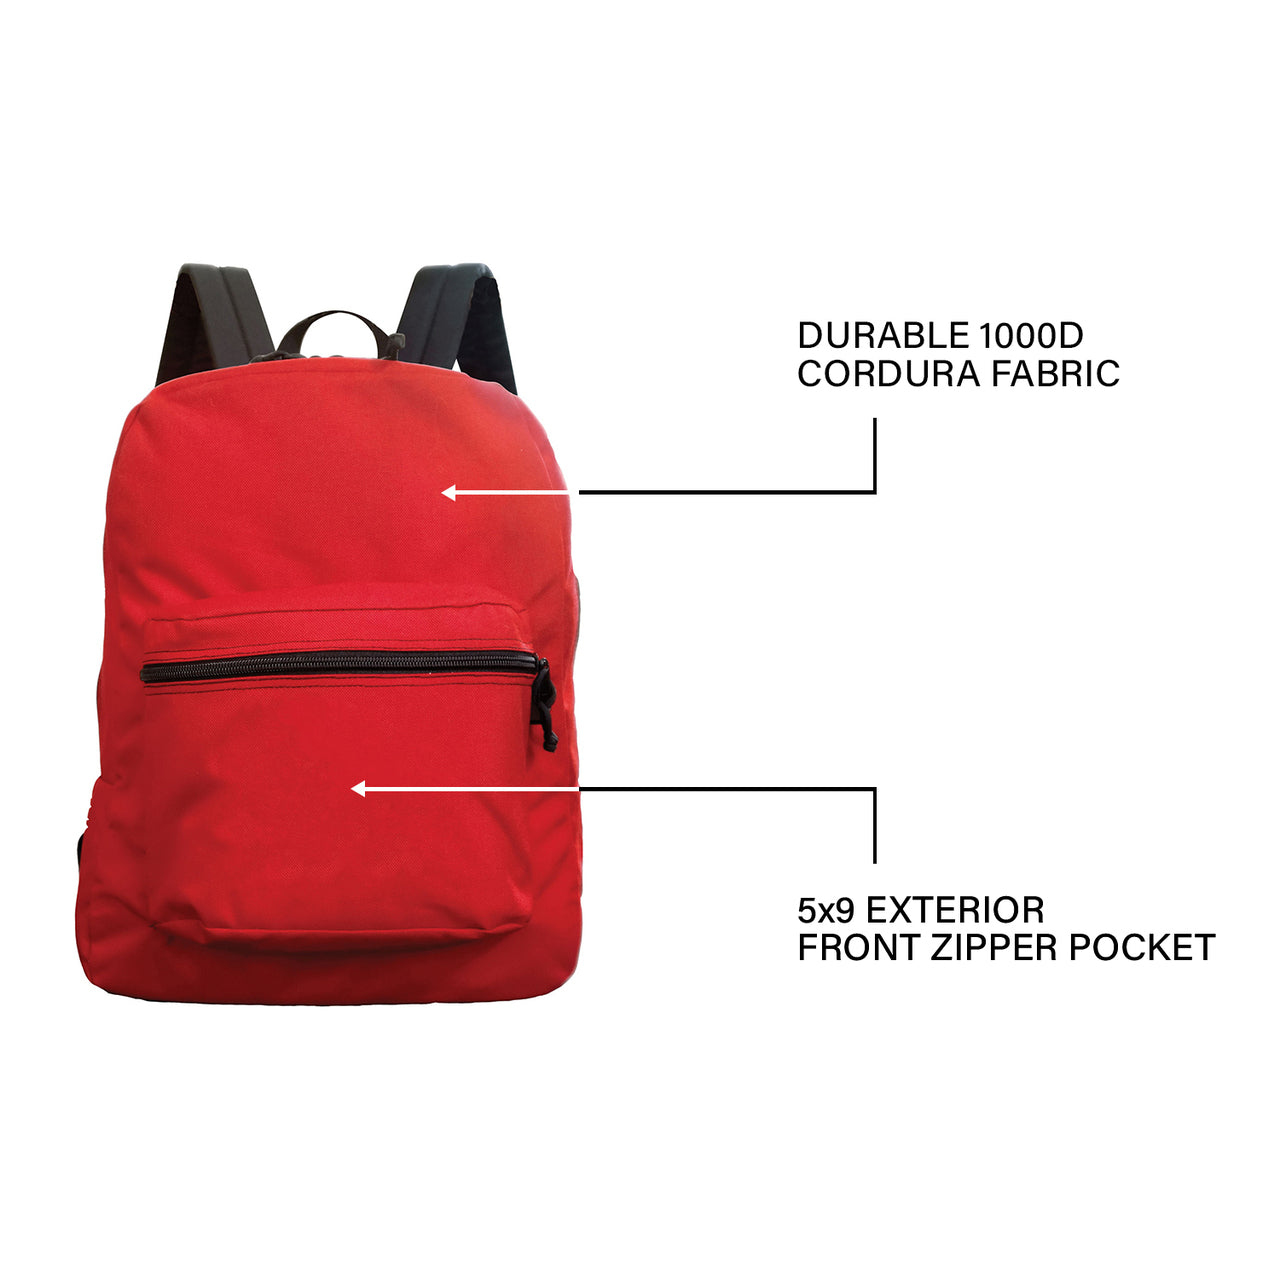 Arizona Wildcats Made in the USA premium Backpack